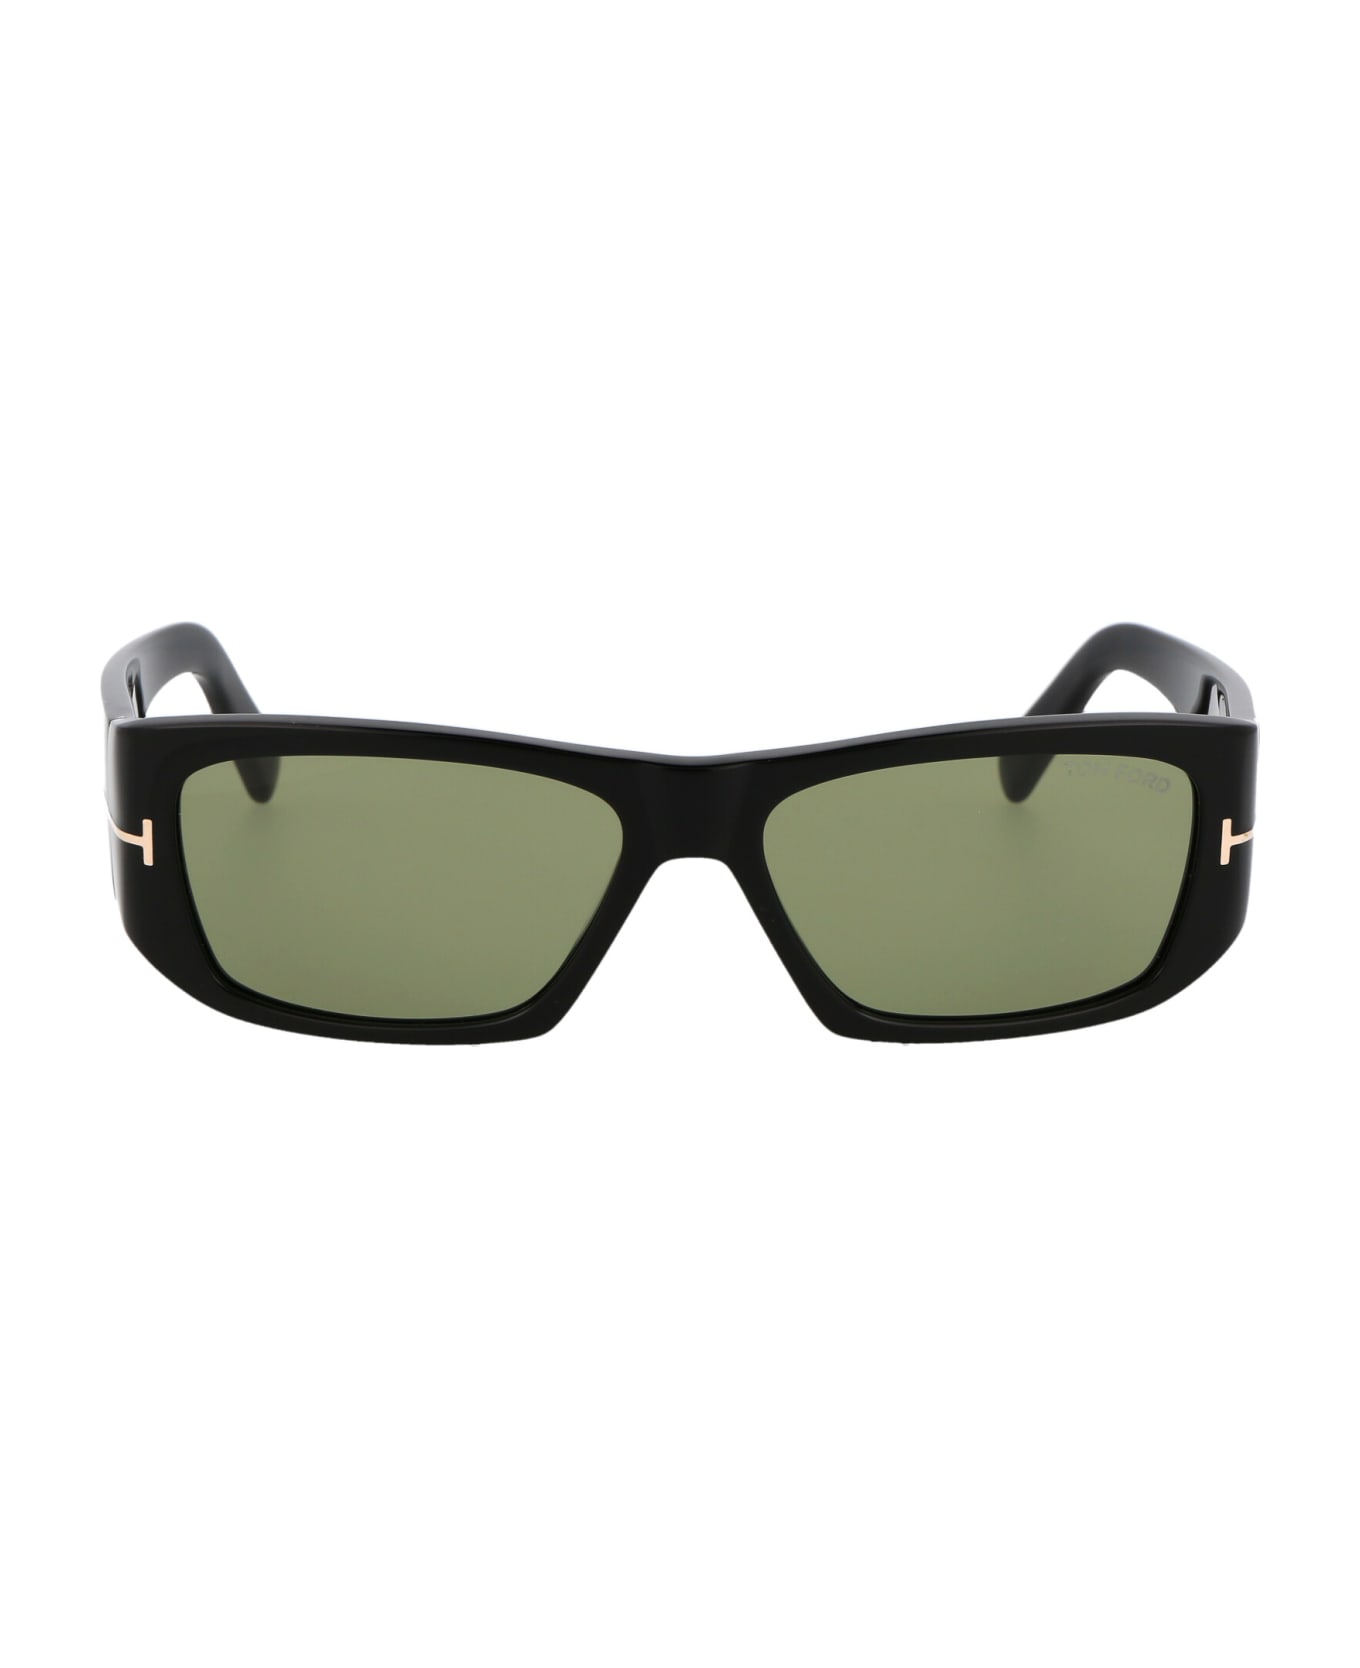 Tom Ford Eyewear Andres-02 Sunglasses - 01N Nero Lucido / Verde サングラス